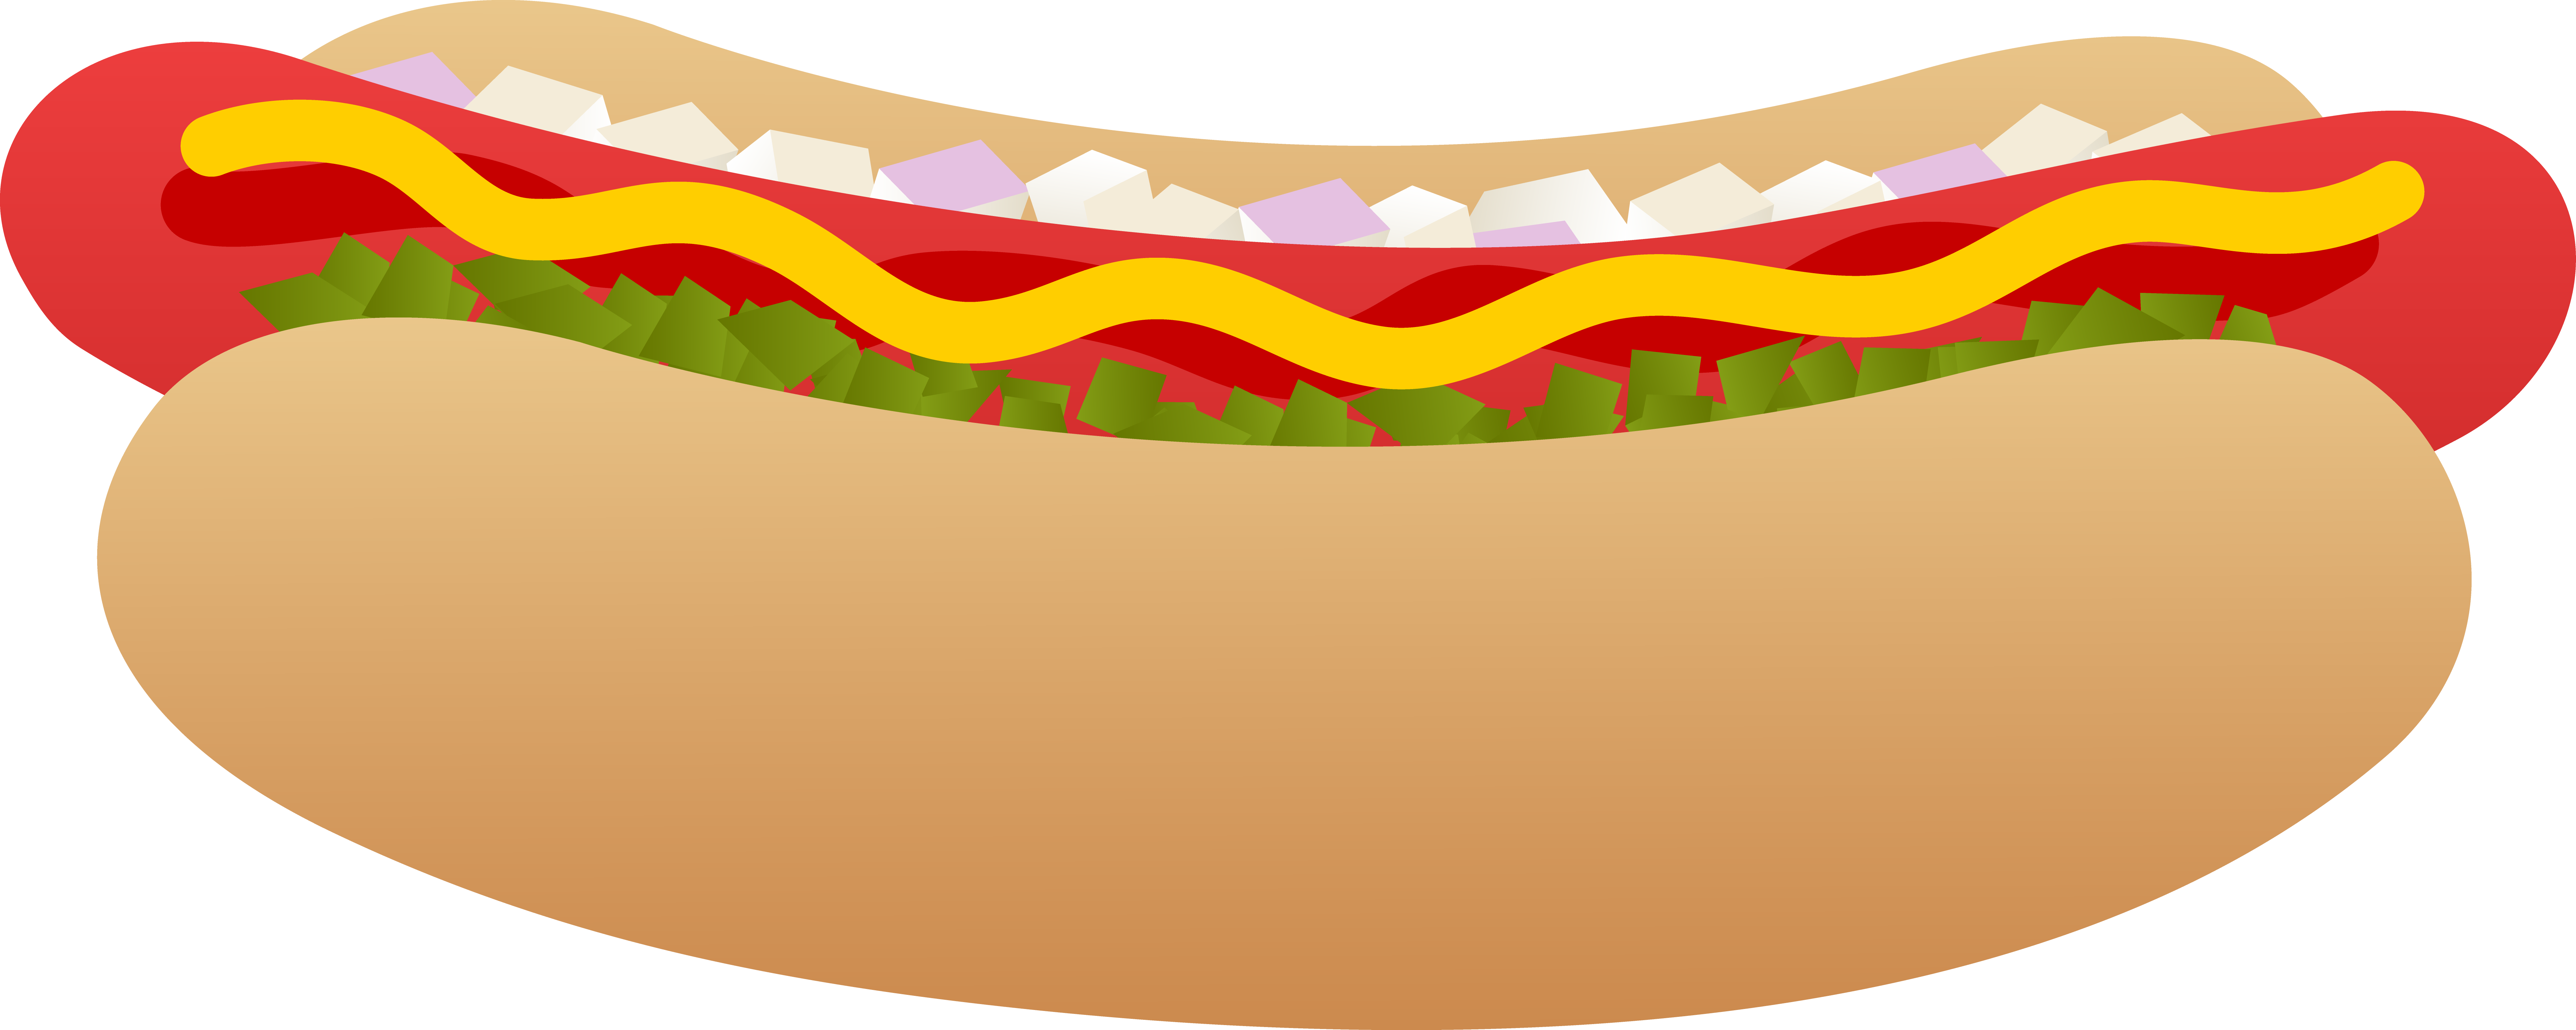 hotdog clipart packaged food